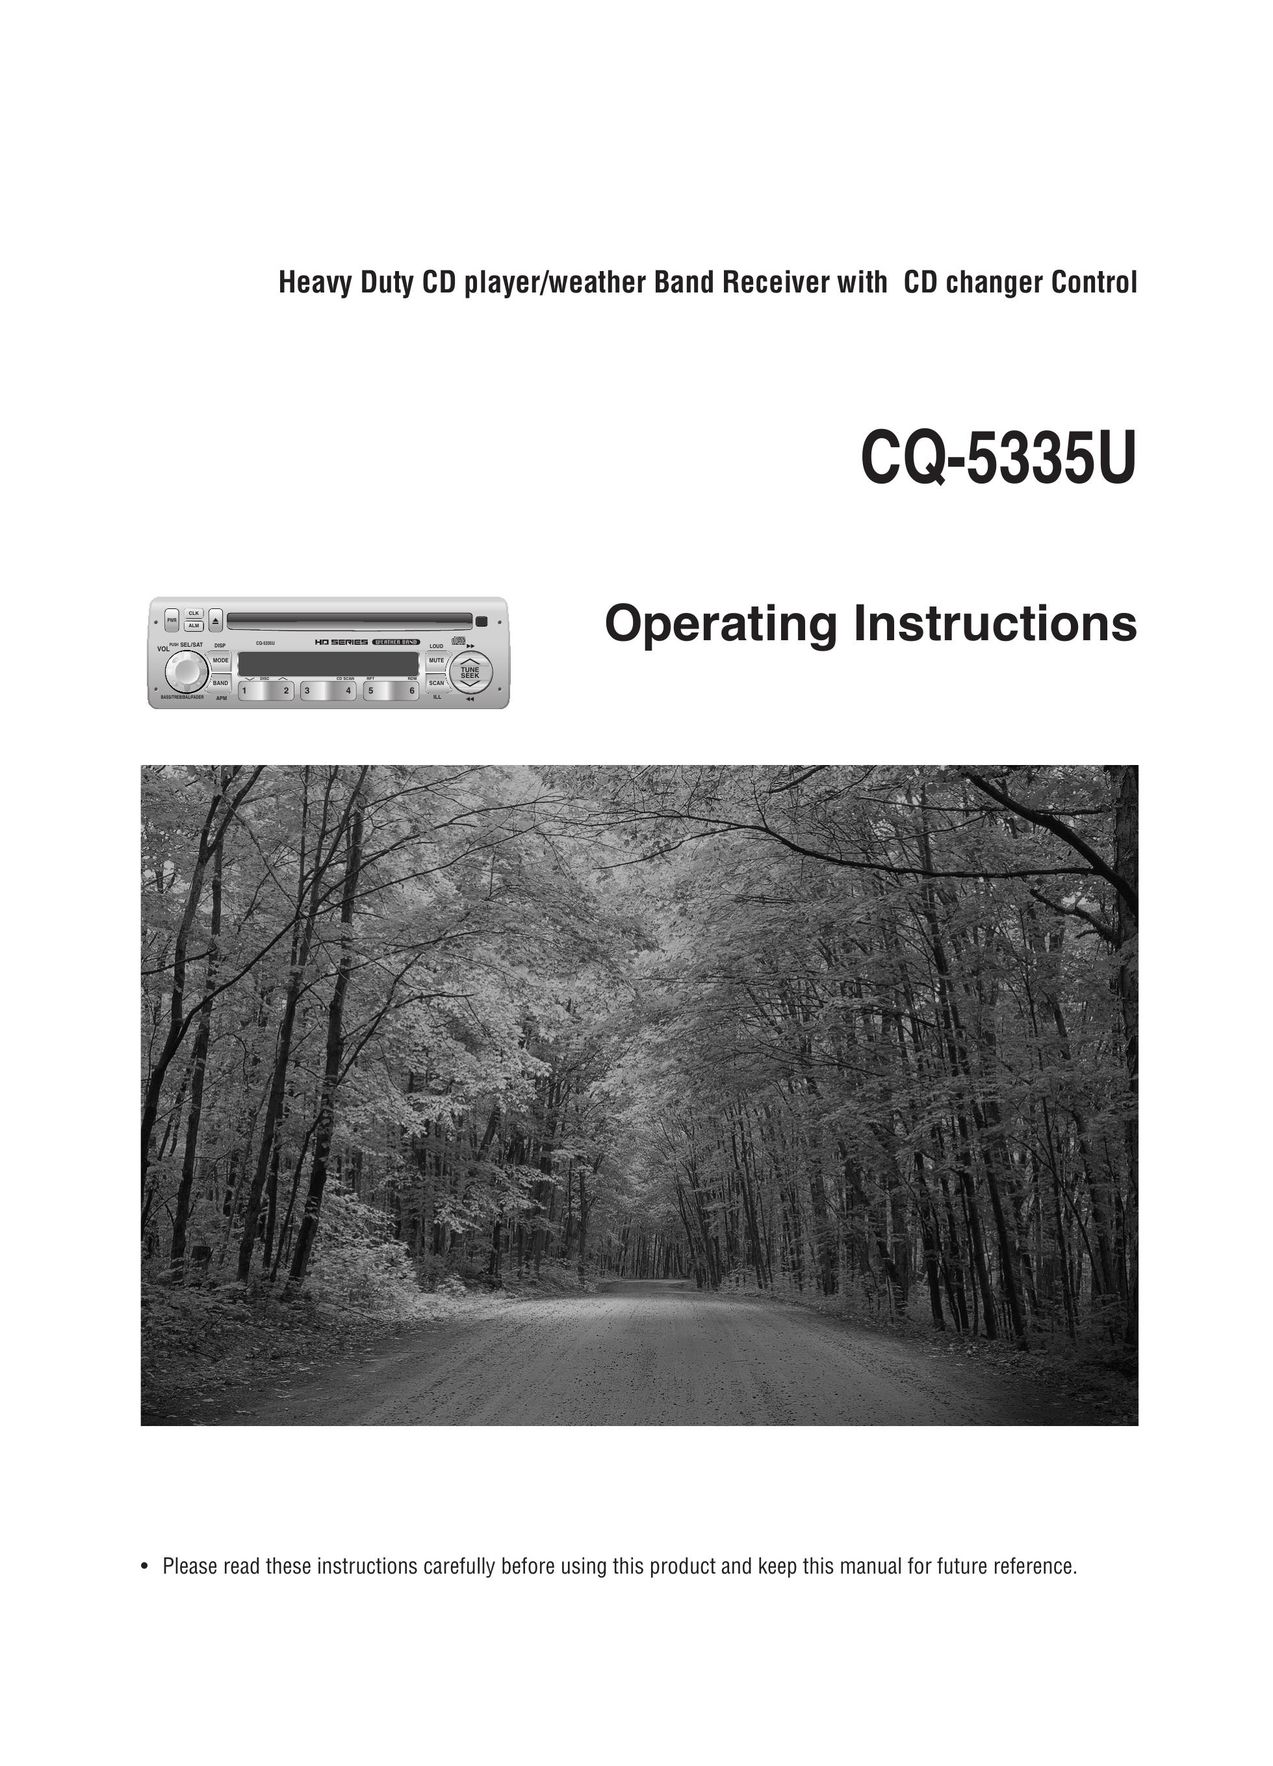 Panasonic CQ-5335U Car Stereo System User Manual